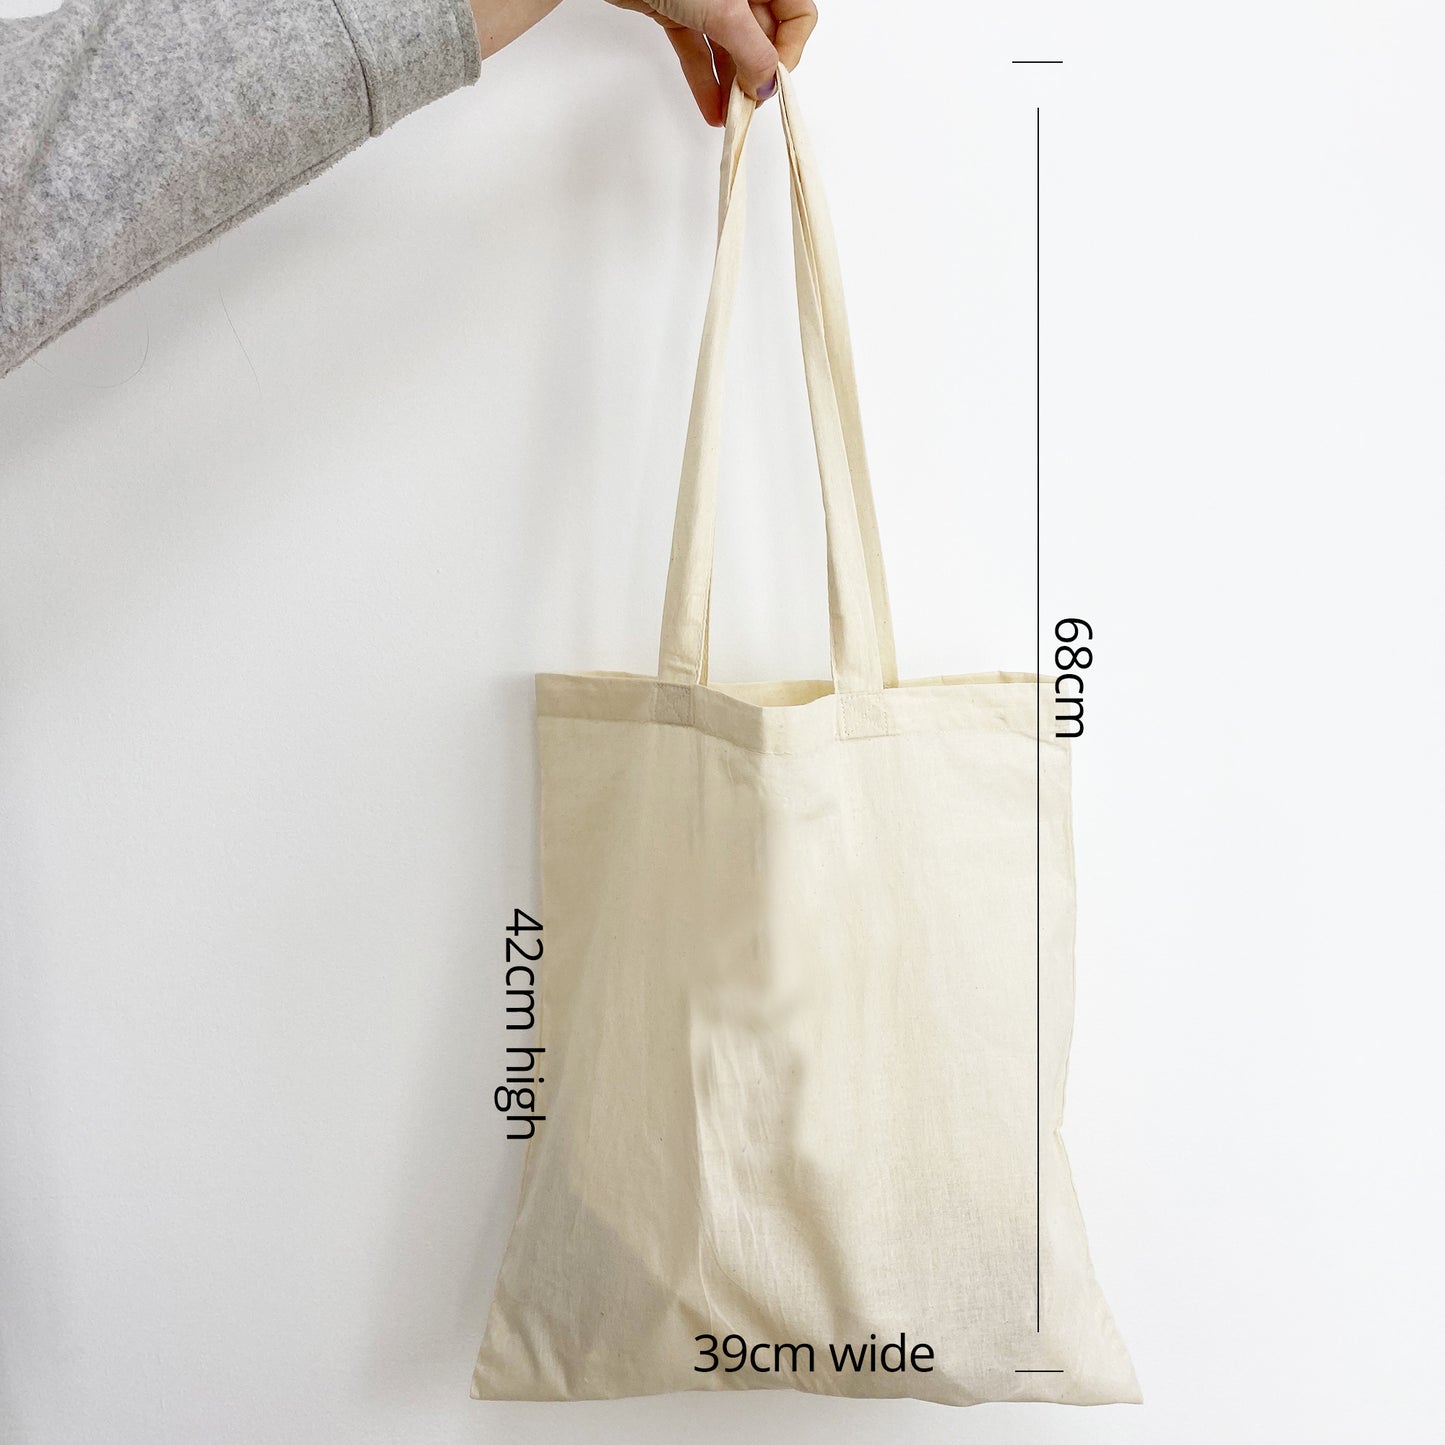 'Fern' Machine Embroidered Tote Bag